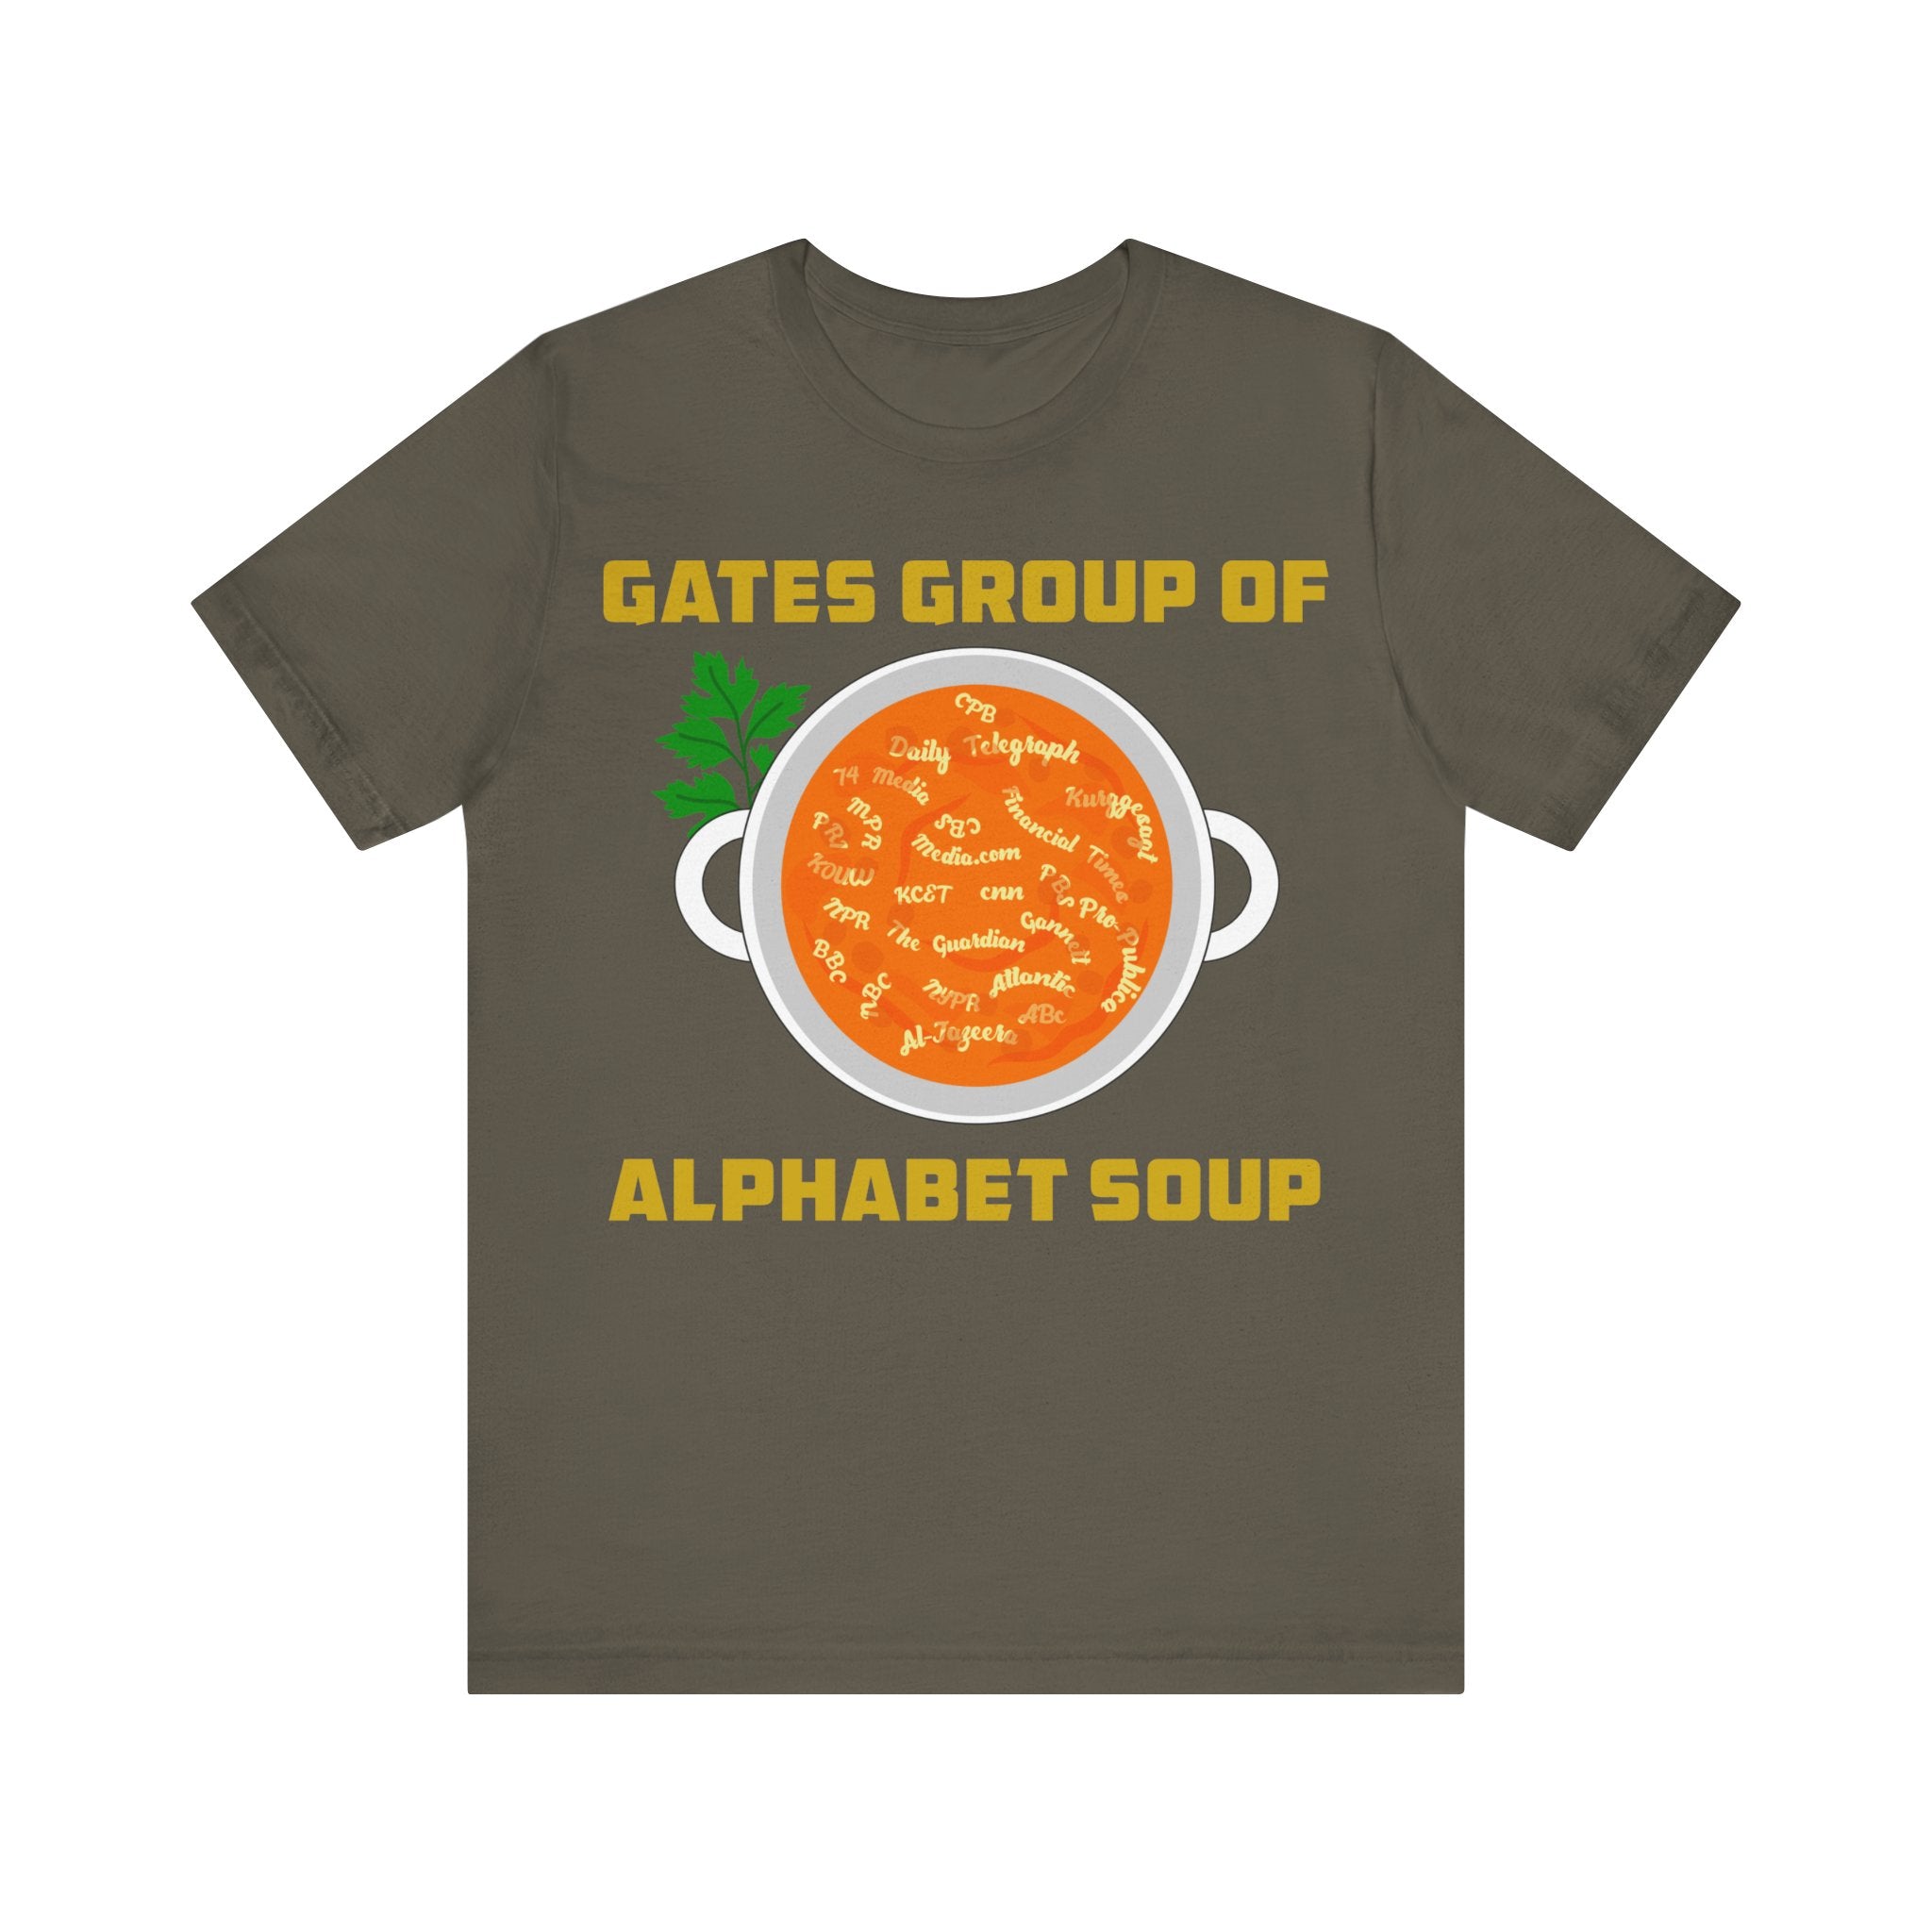 Gates Group of Alphabet Soup